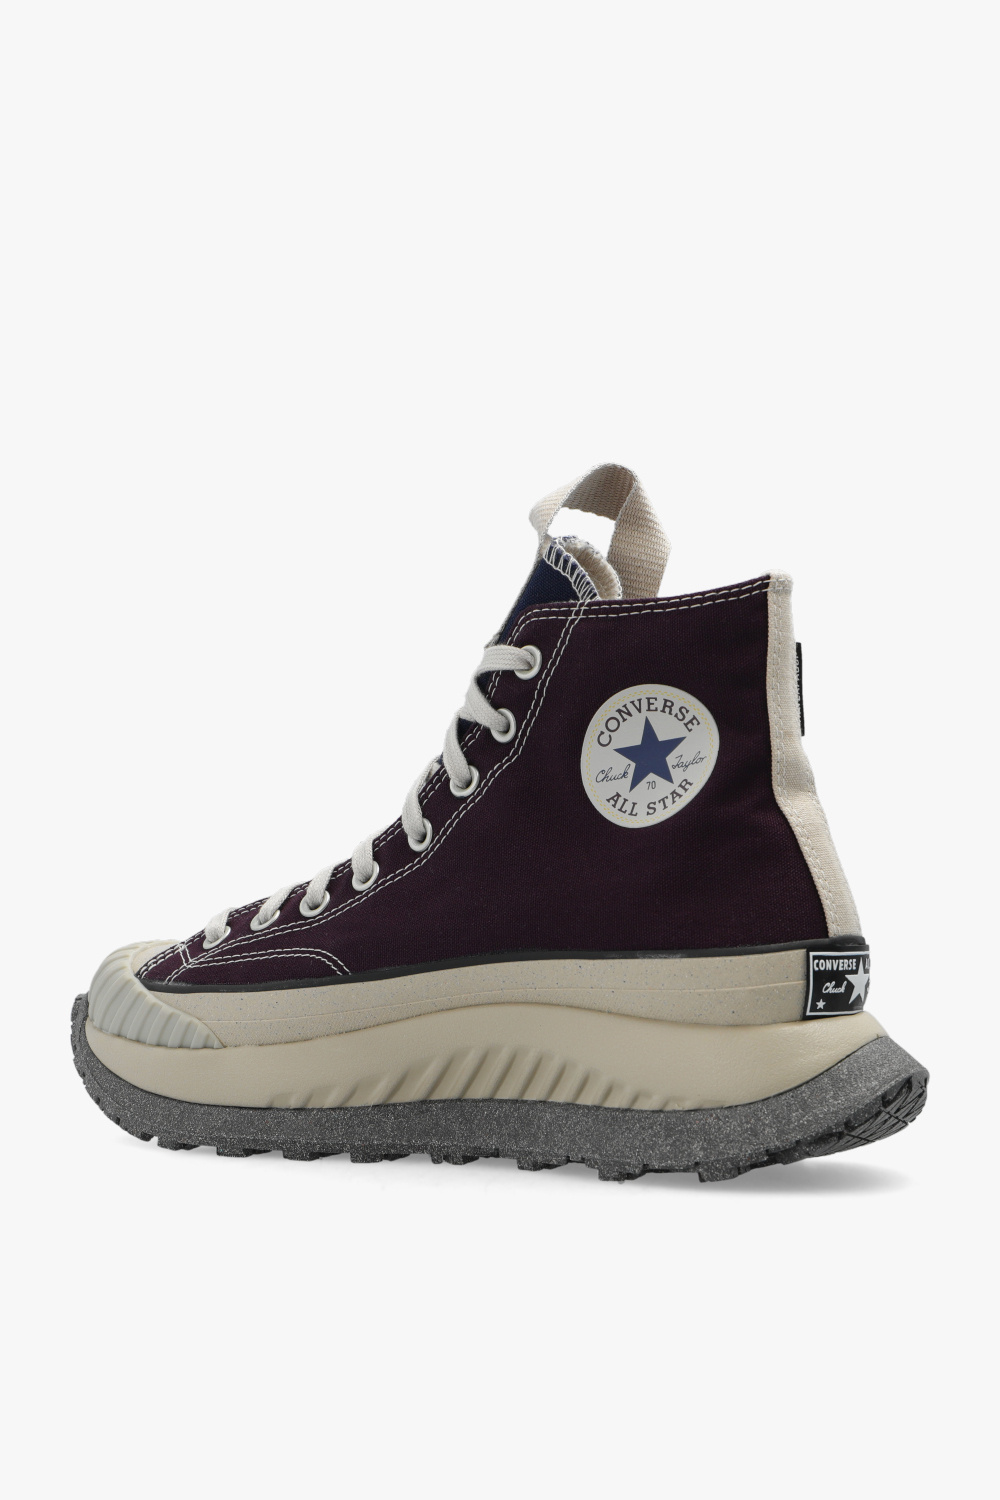 CONVERSE ALL STAR NOKORIZOME OX HI ￥9 - De-iceShops - 'Chuck 70 AT - CX' sneakers Converse